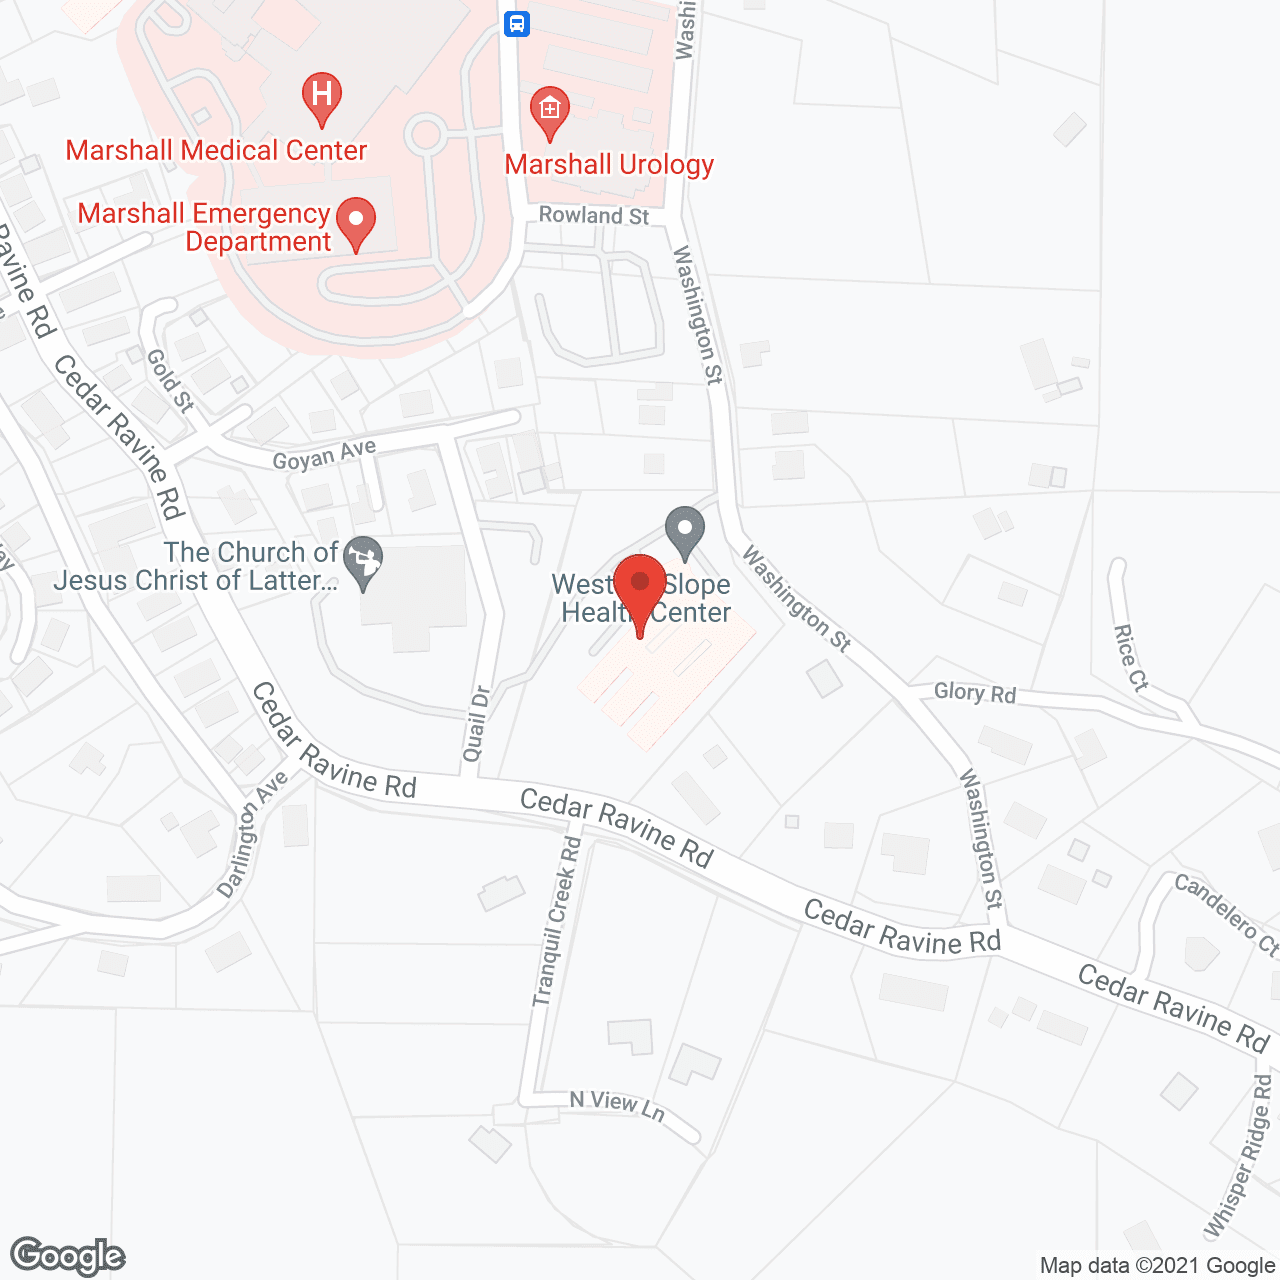 Western Slope Health Center in google map